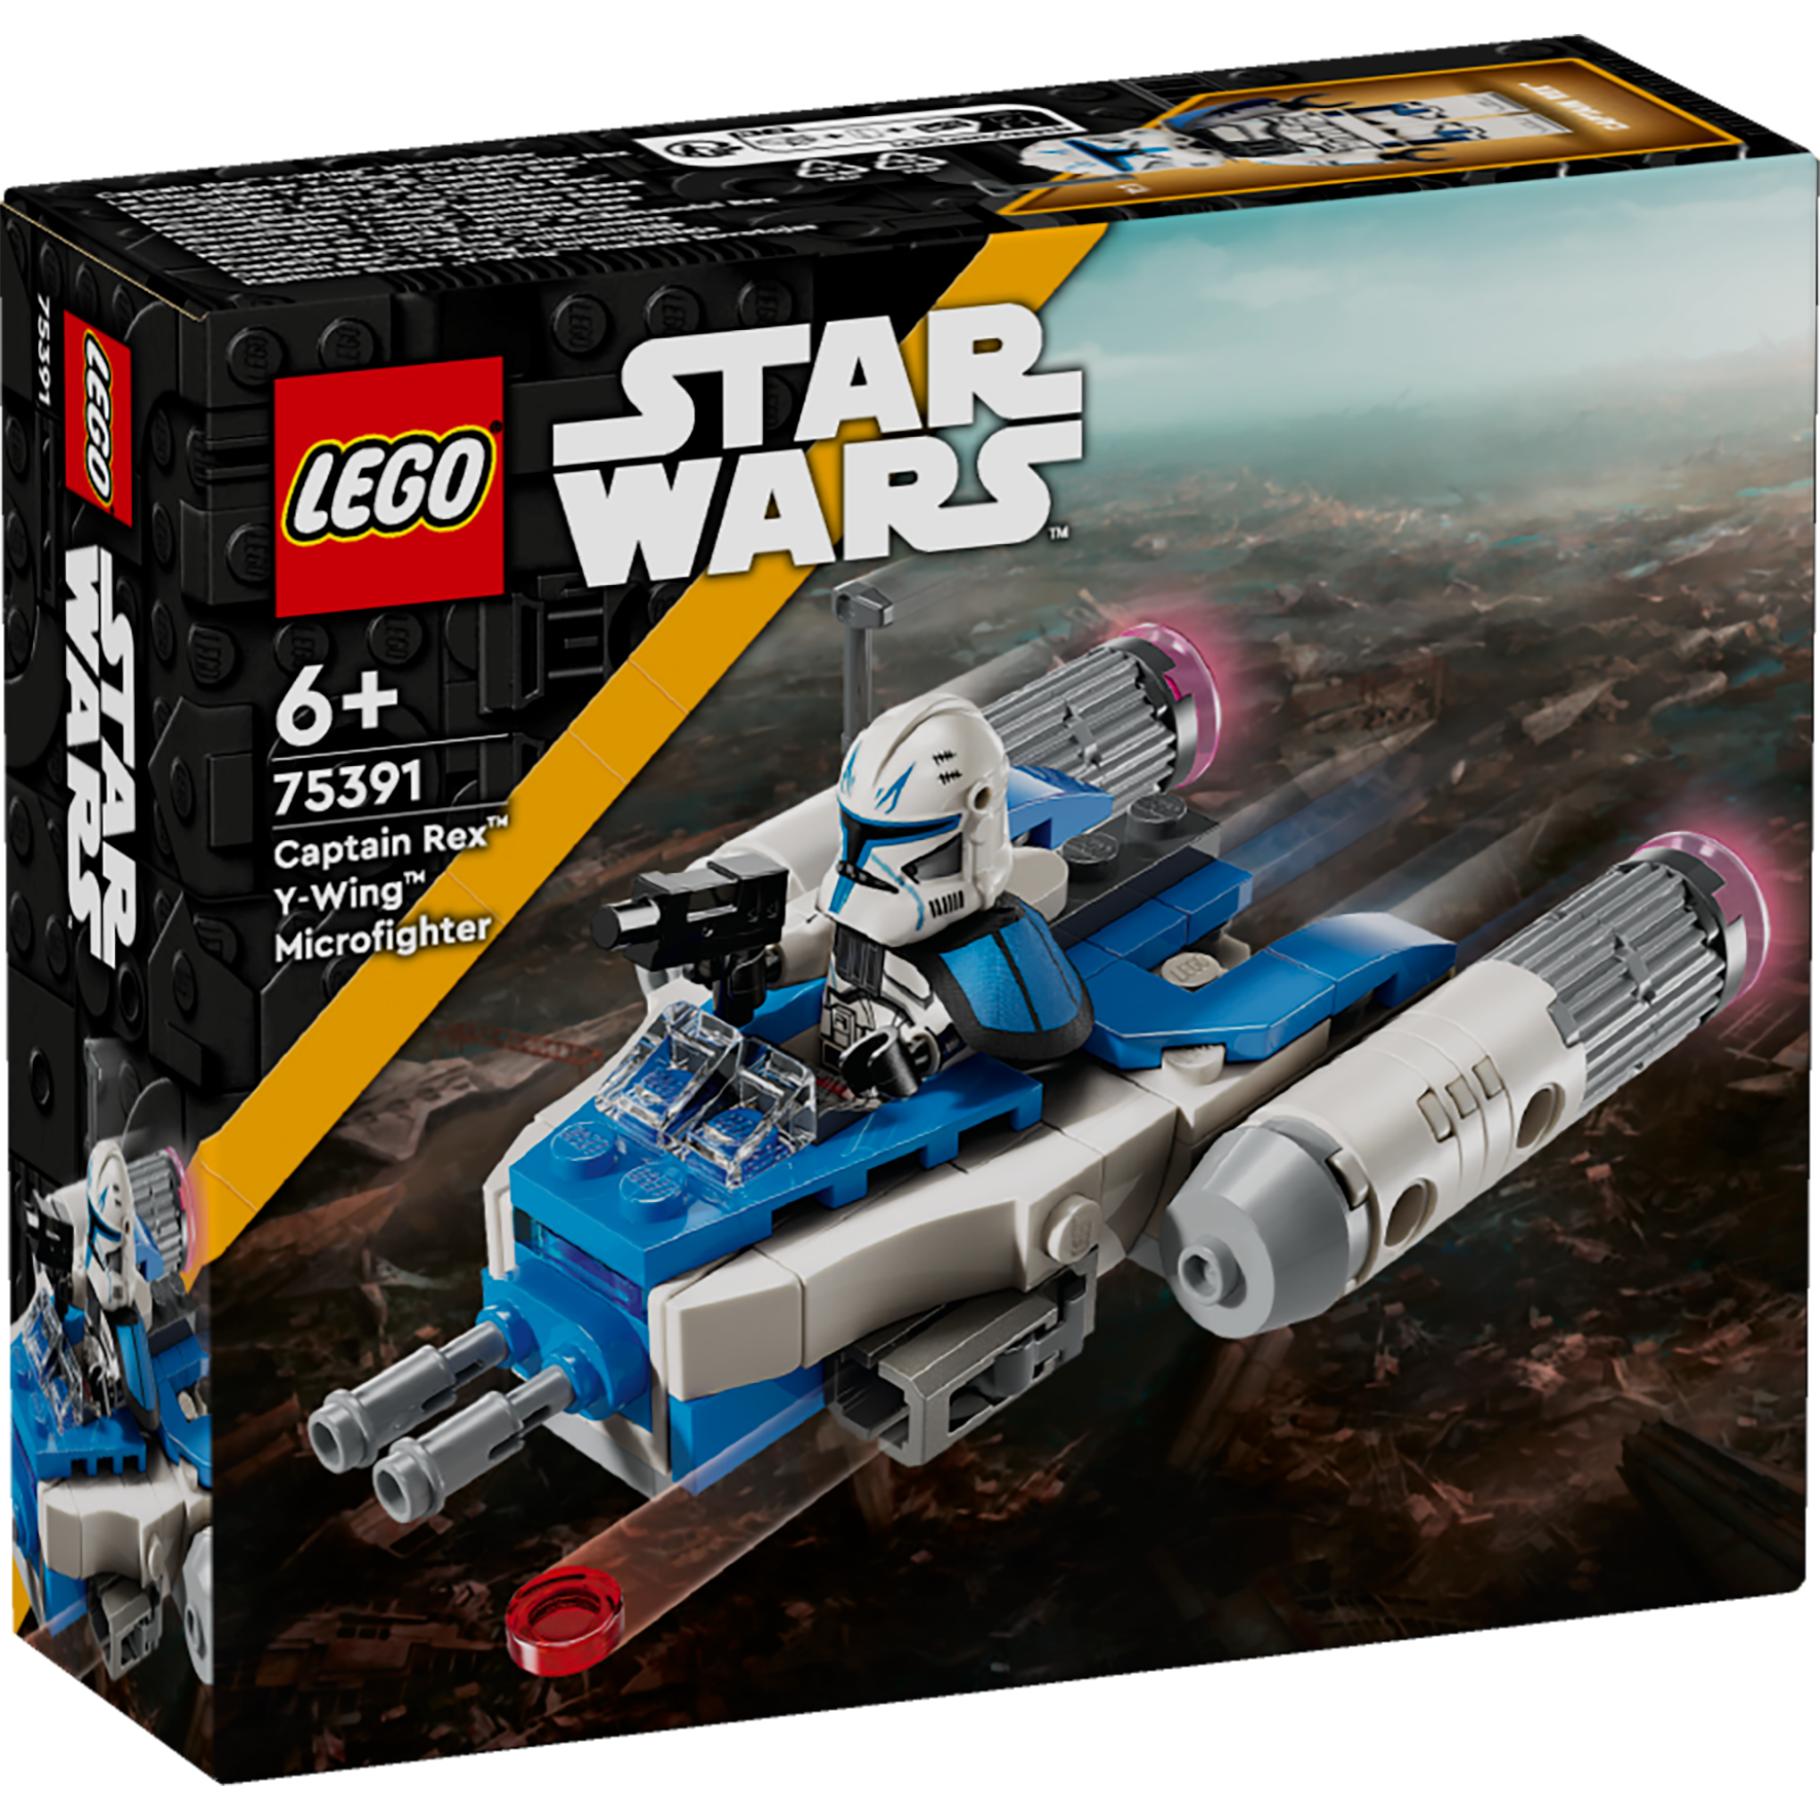 LEGO Star Wars 75391 Captain Rex Y-Wing Microfighter